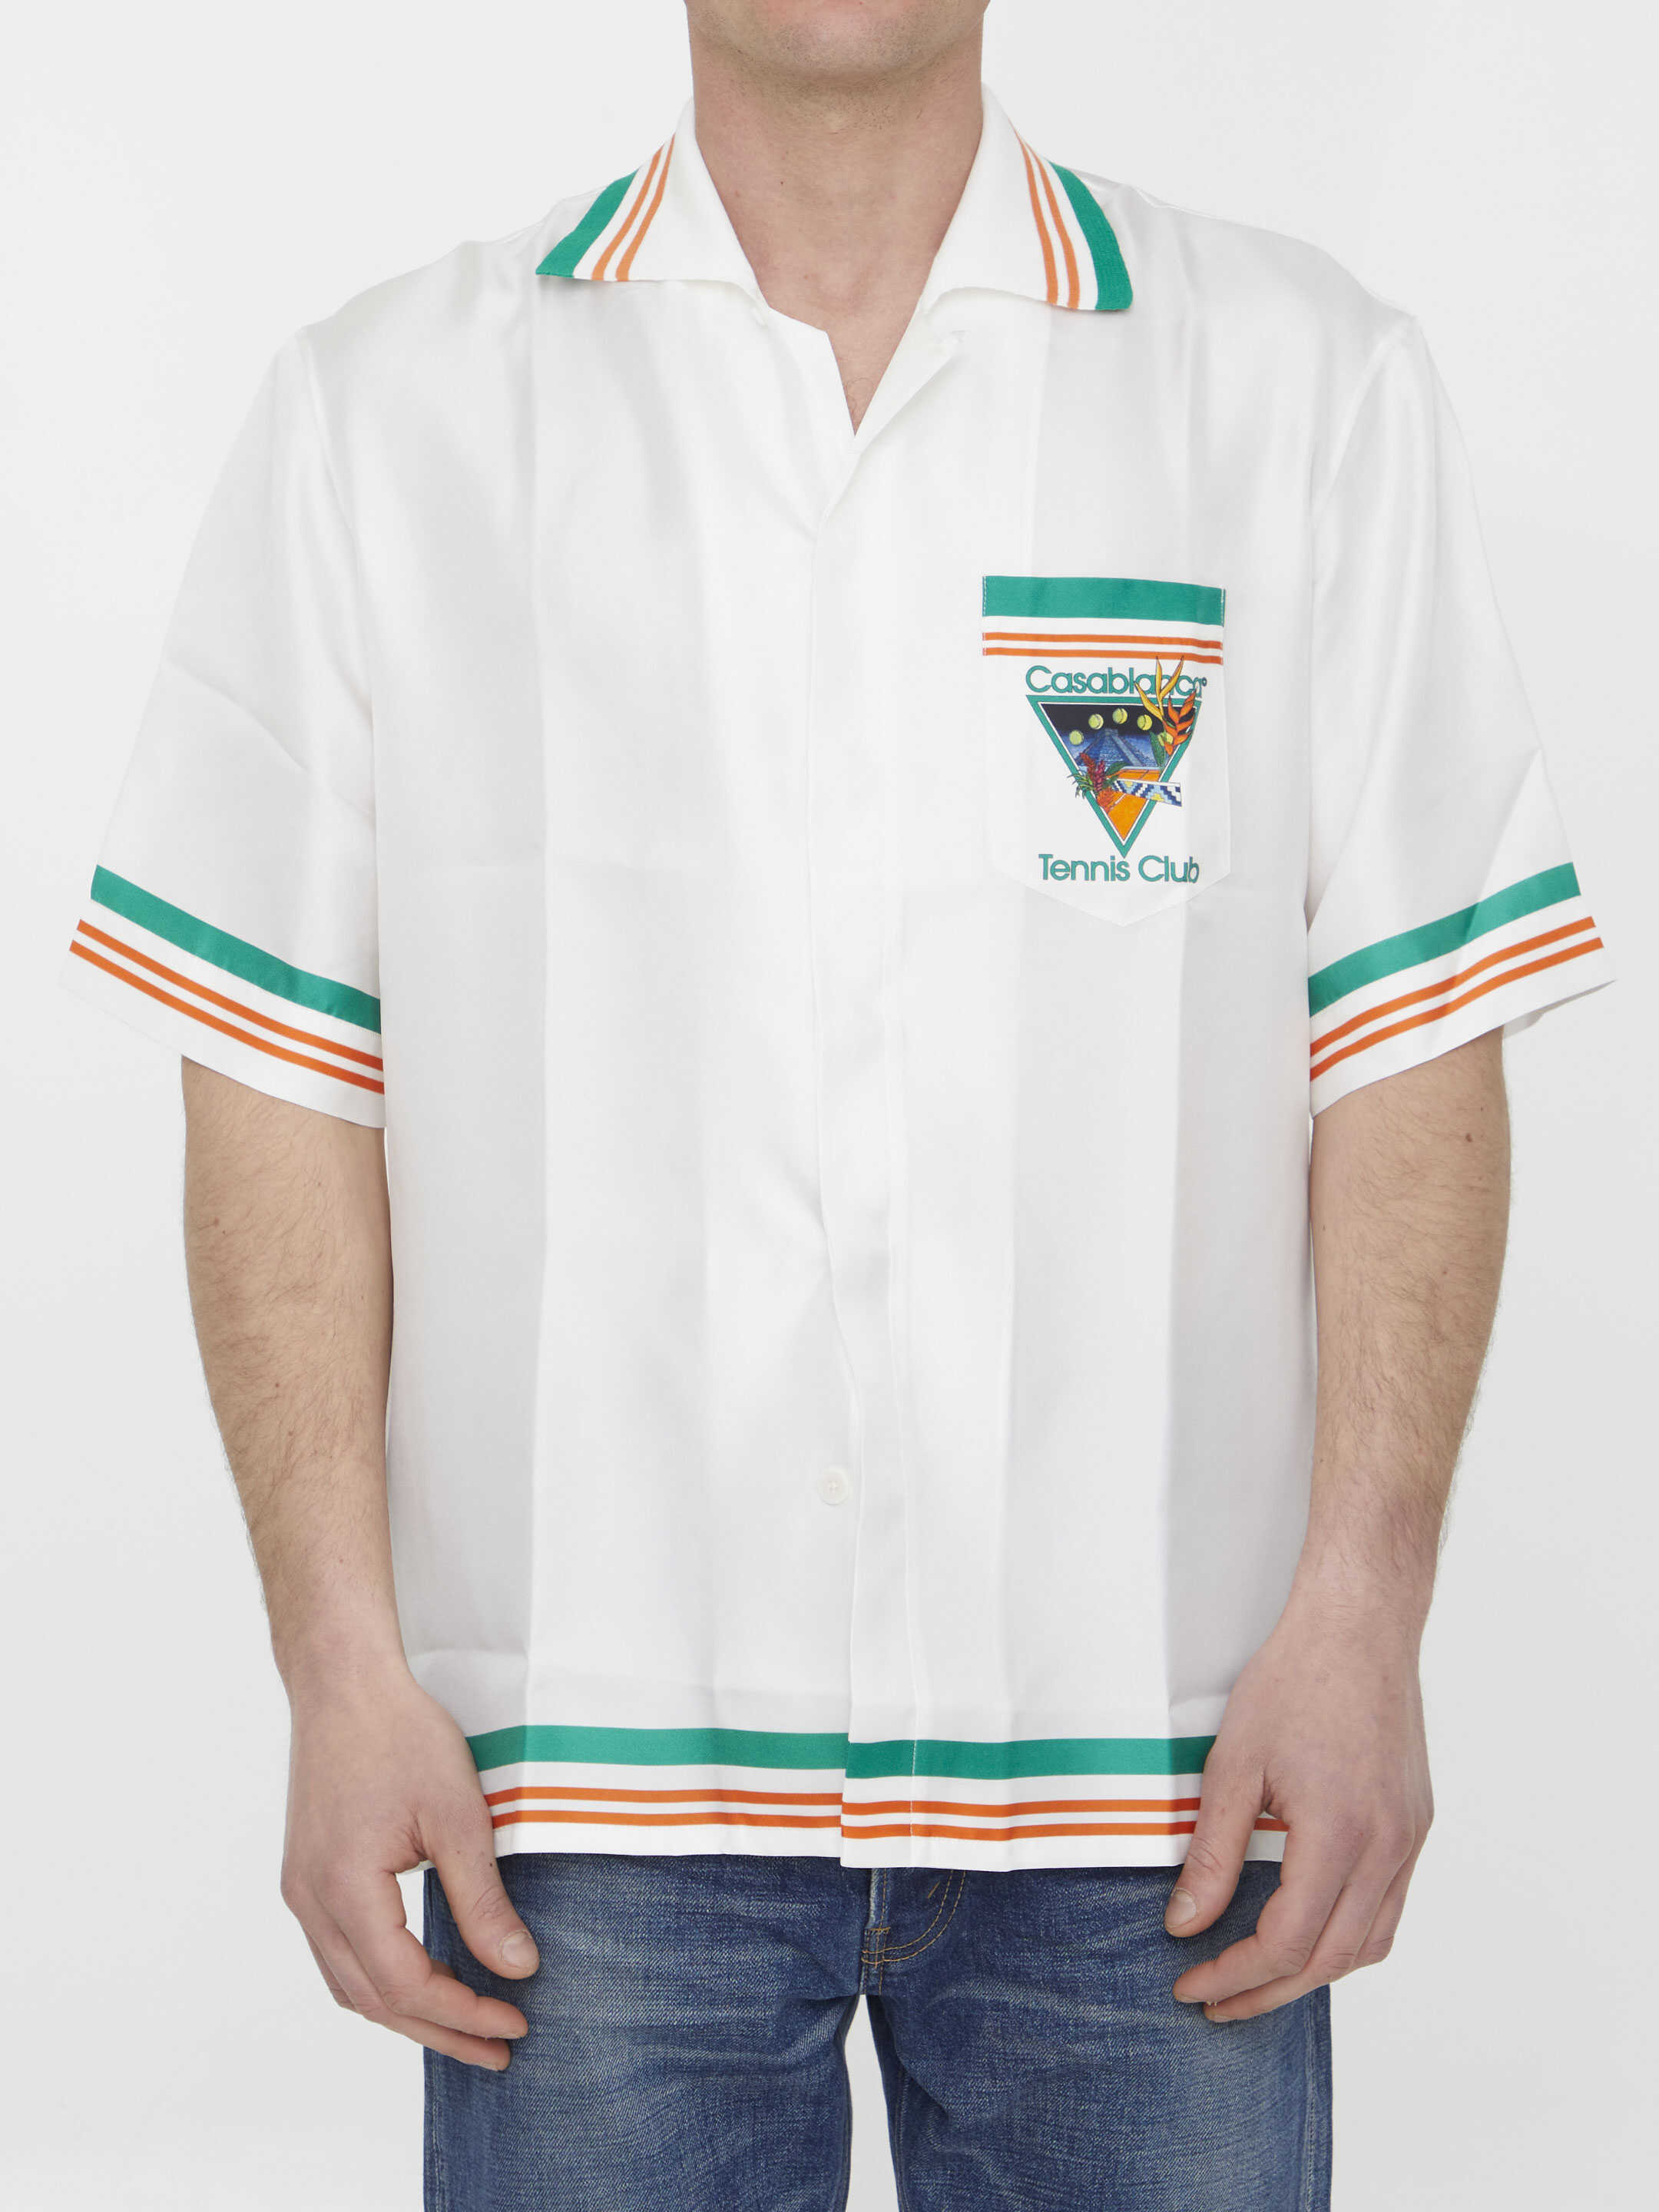 Casablanca Tennis Club Icon Shirt White